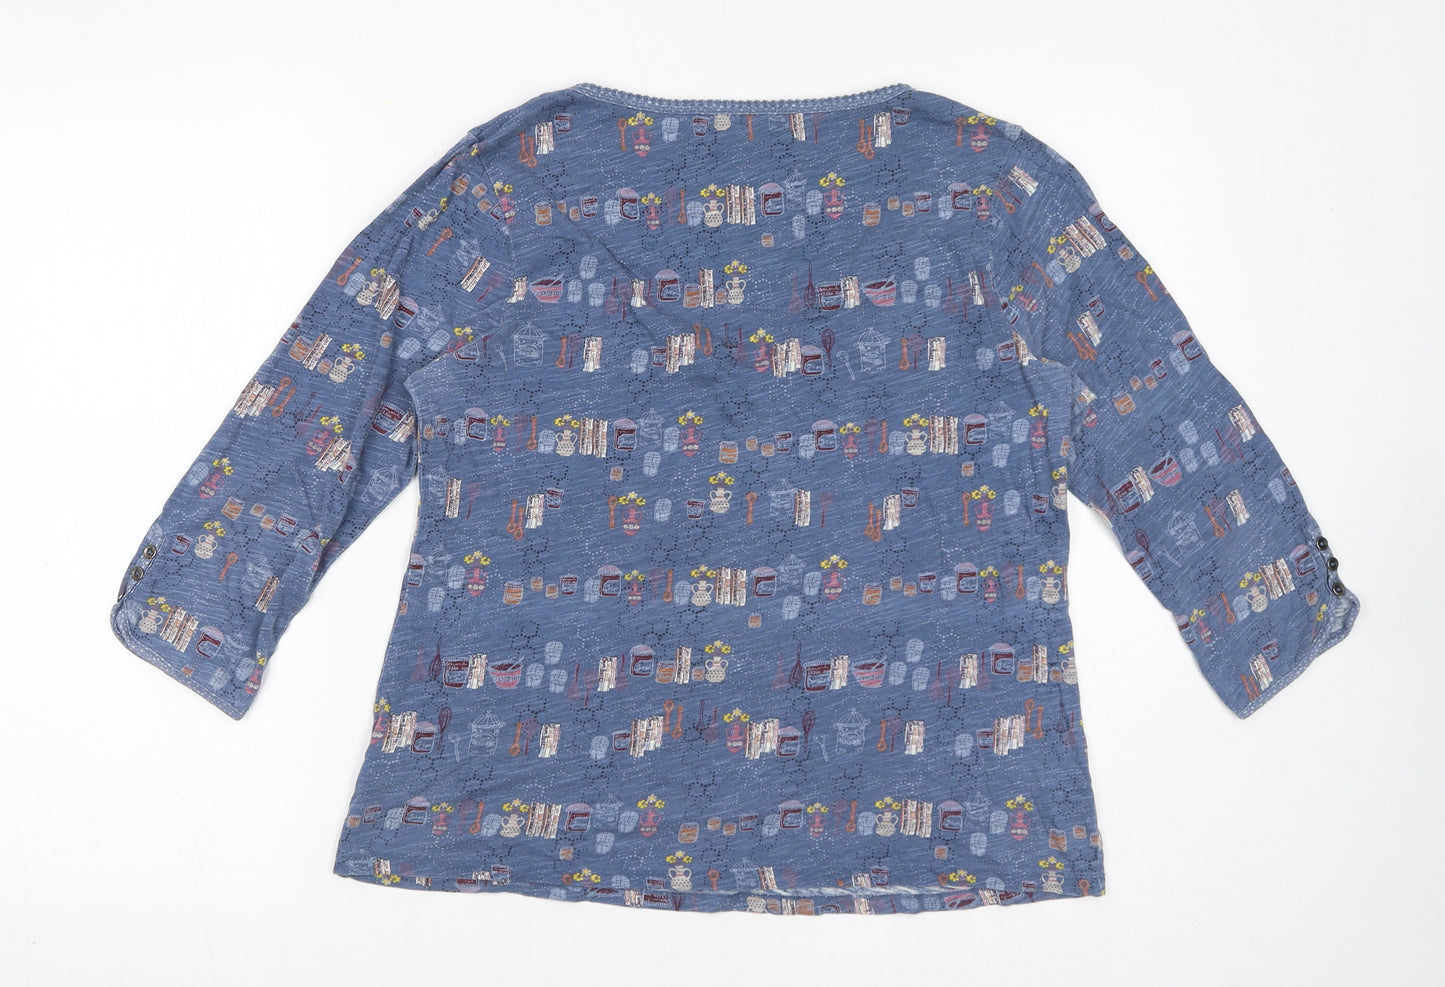 MANTARAY PRODUCTS Womens Blue Geometric 100% Cotton Basic T-Shirt Size 14 Round Neck